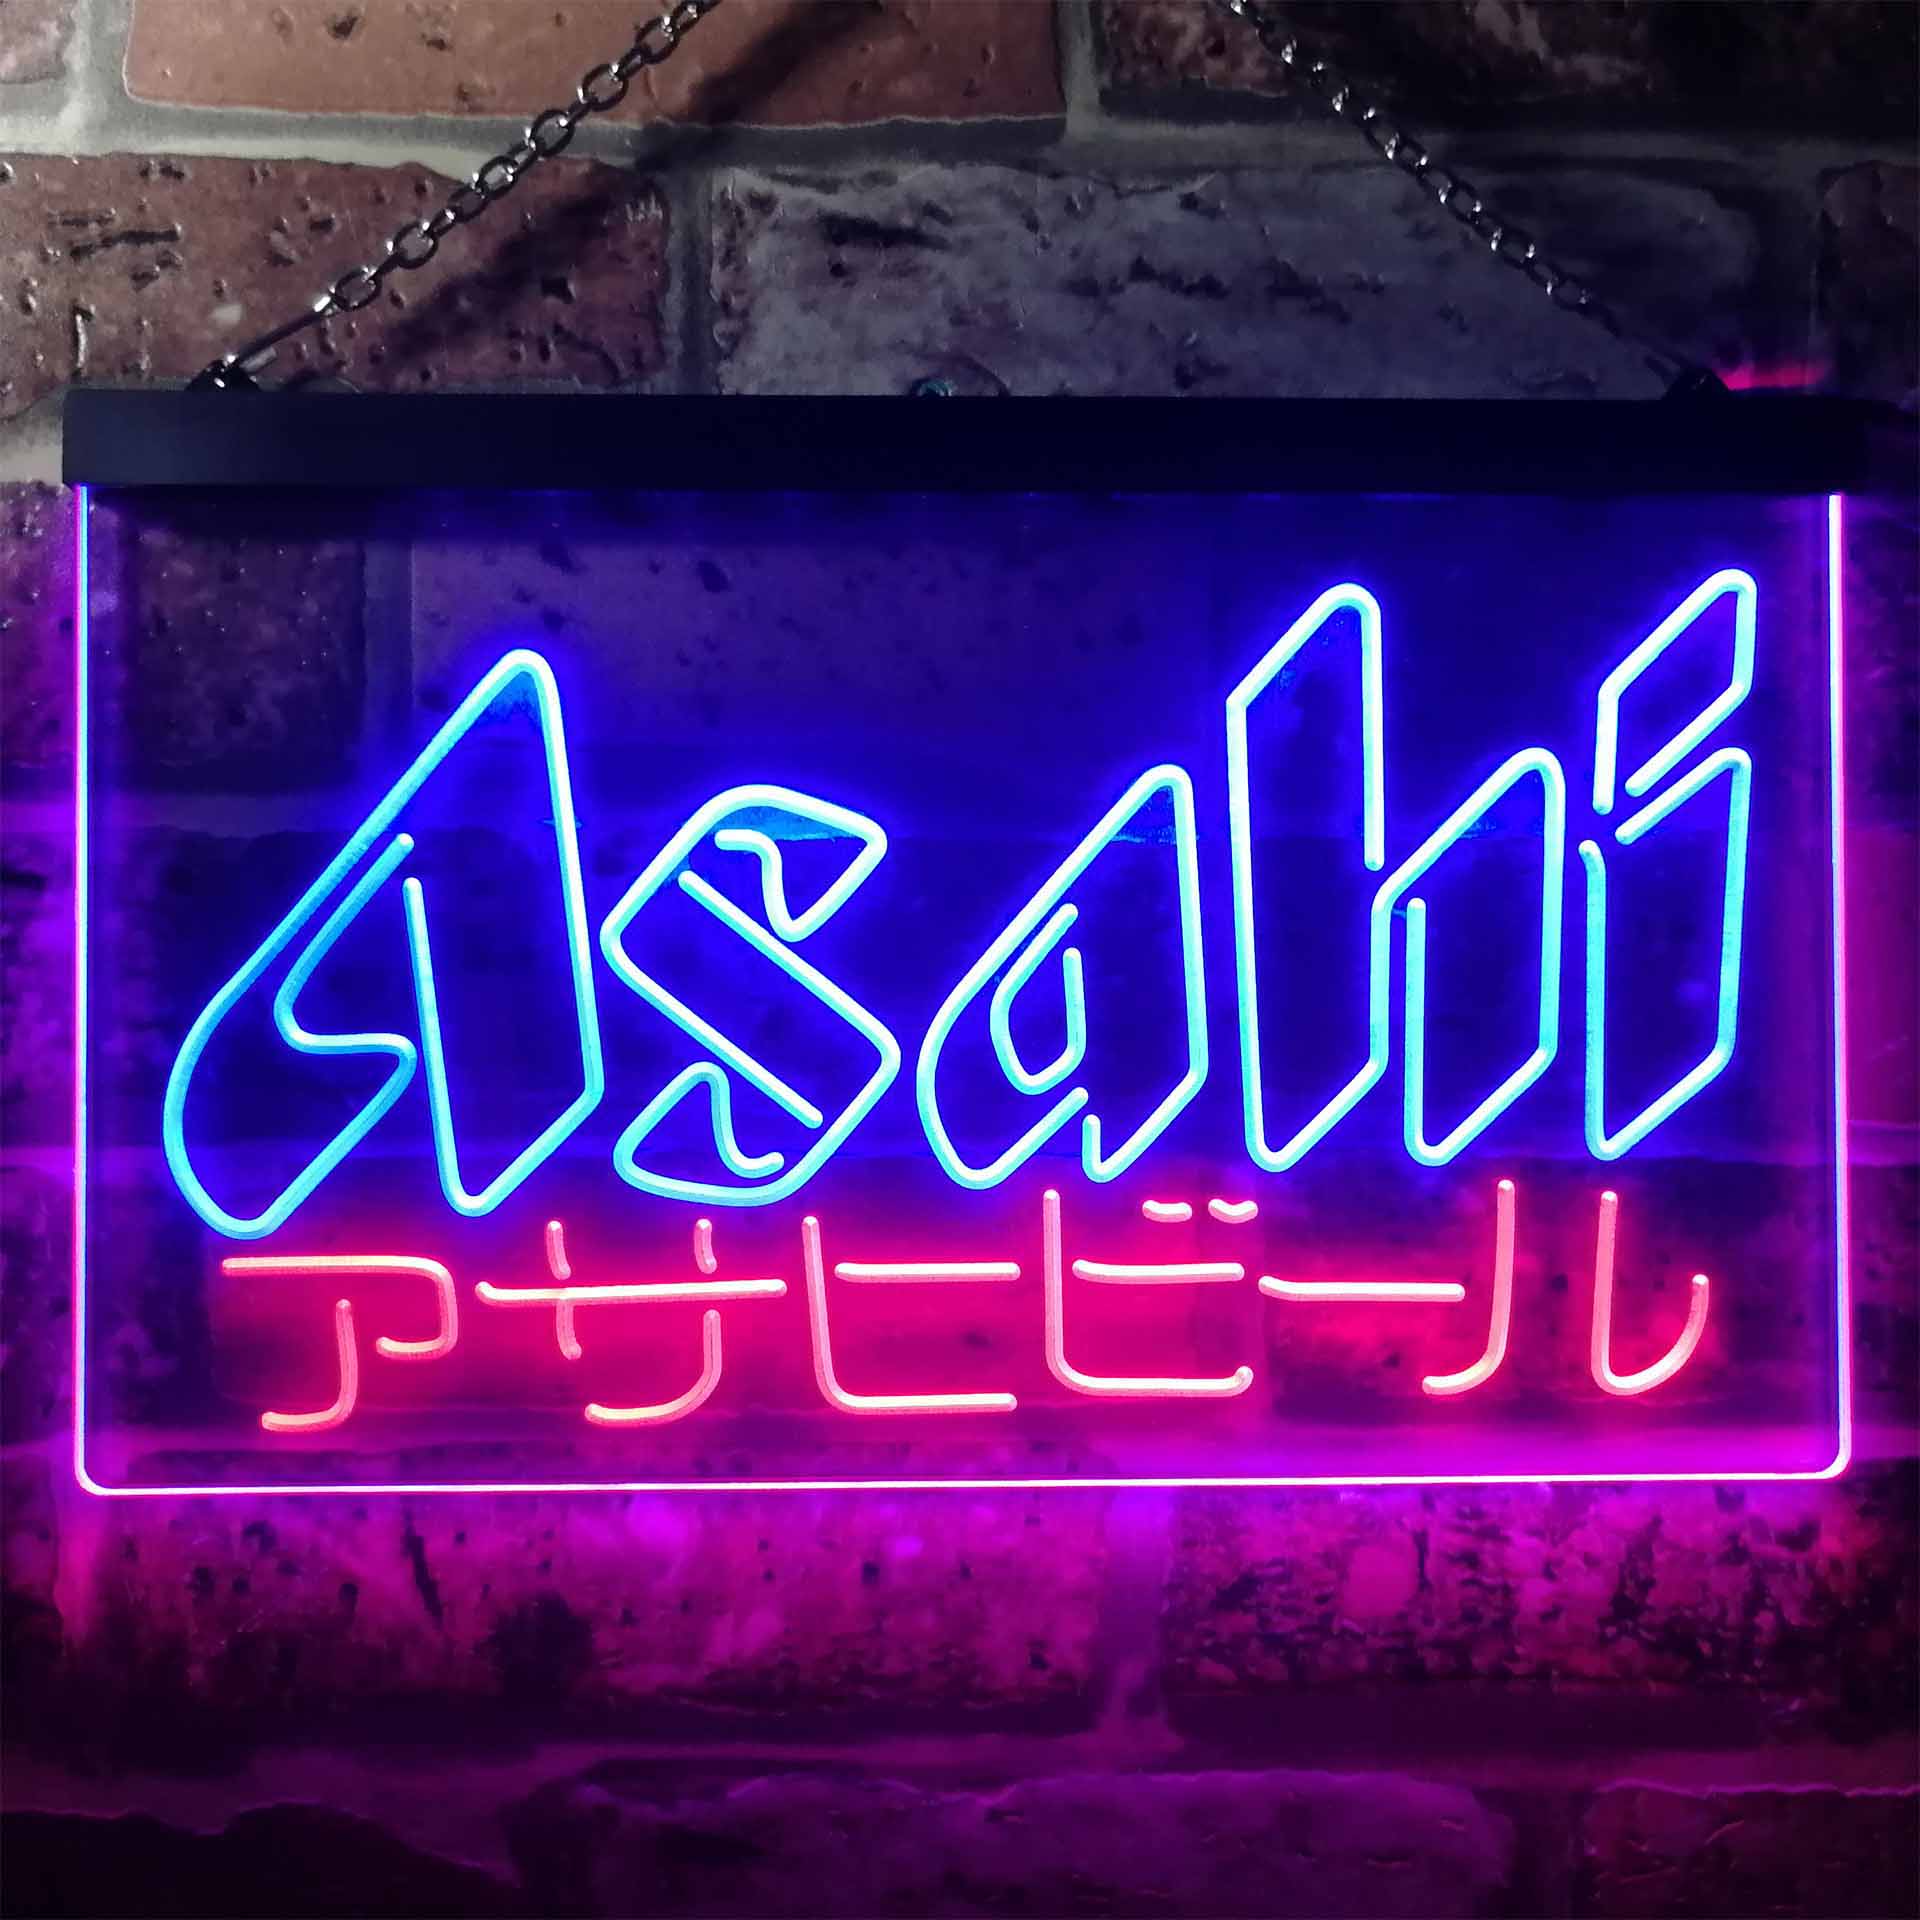 Asahi Japan Beer Bar Dual Color LED Neon Sign ProLedSign